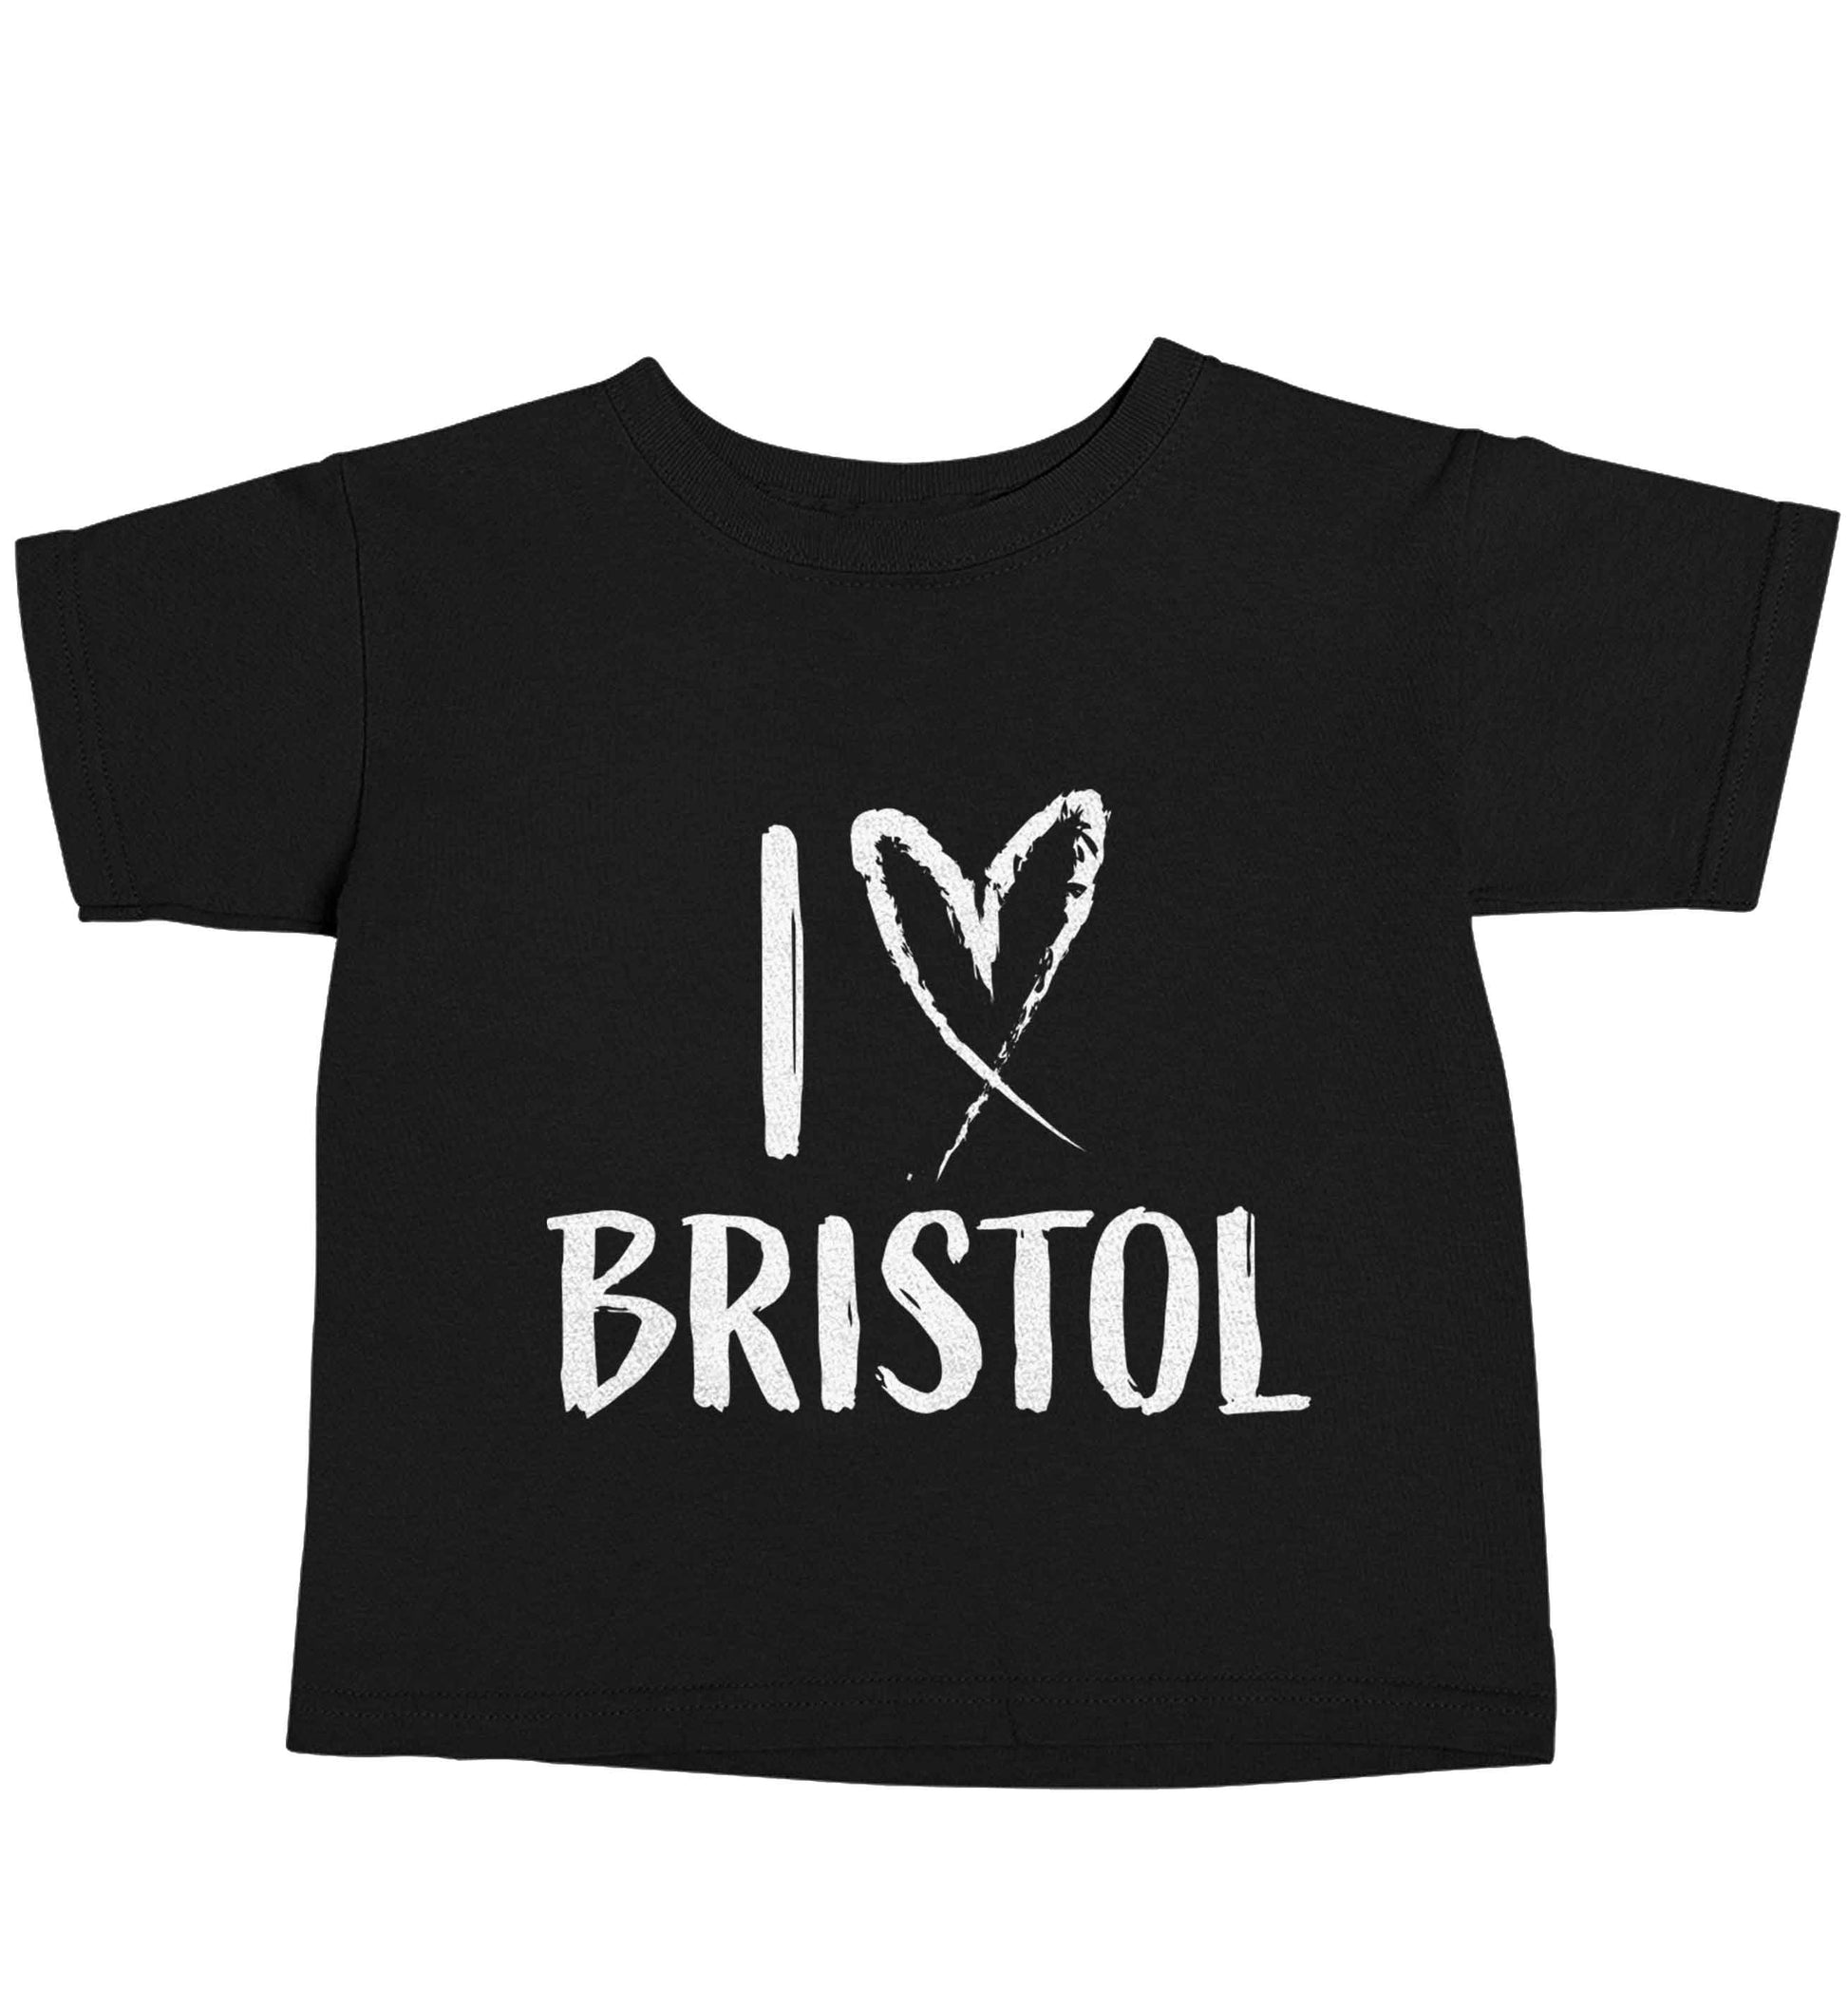 I love Bristol Black baby toddler Tshirt 2 years